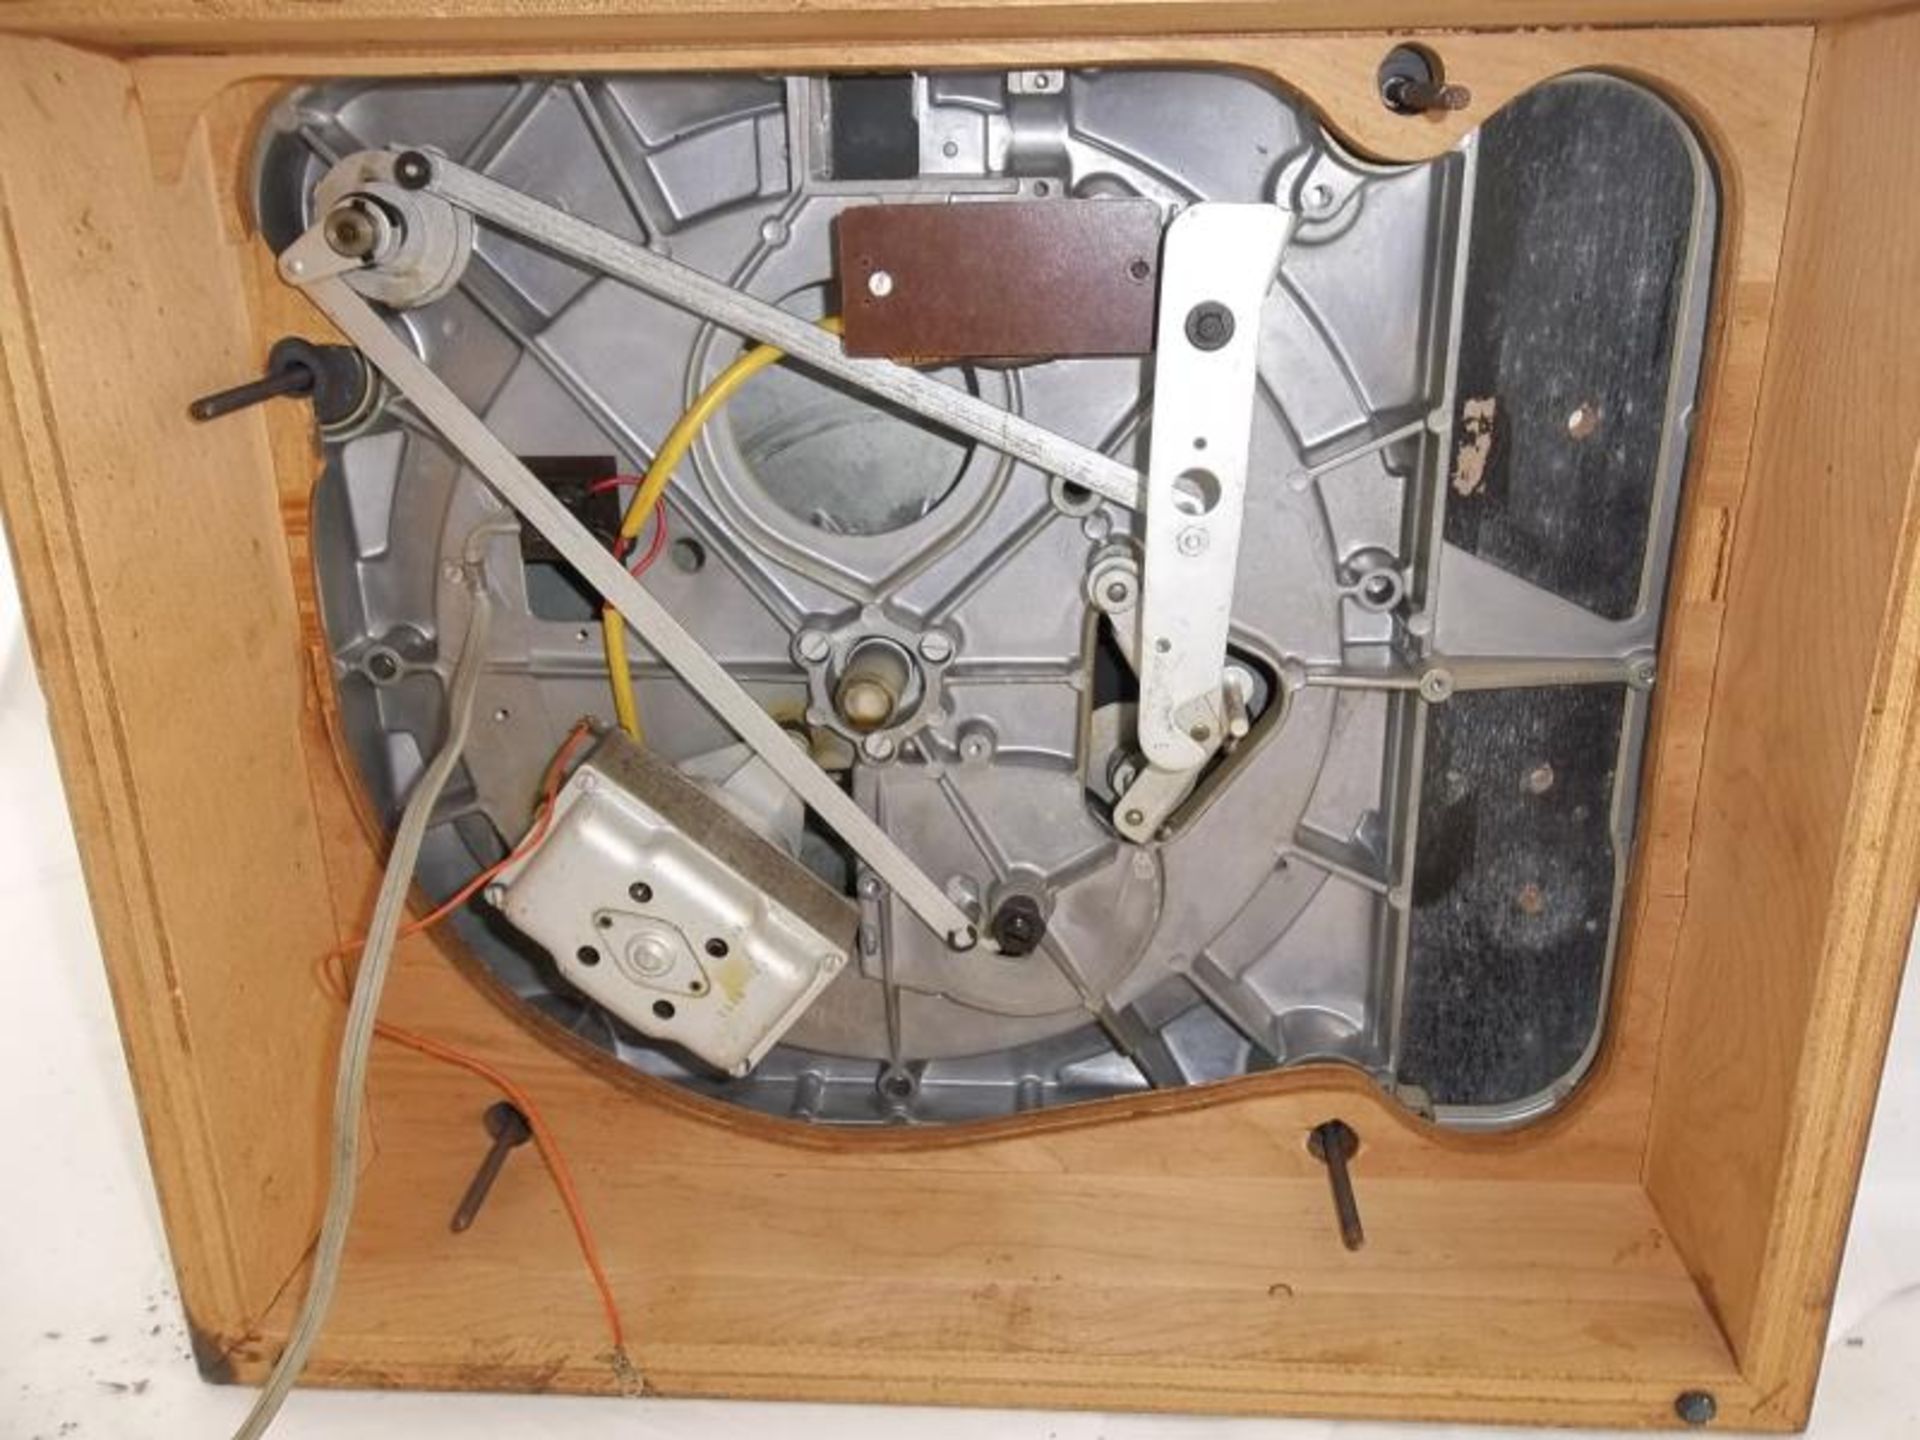 Thorens TD 121 turntable, Made in Switzerland, 33 1/3, #1329, no arm, veneer damaged - Image 4 of 4